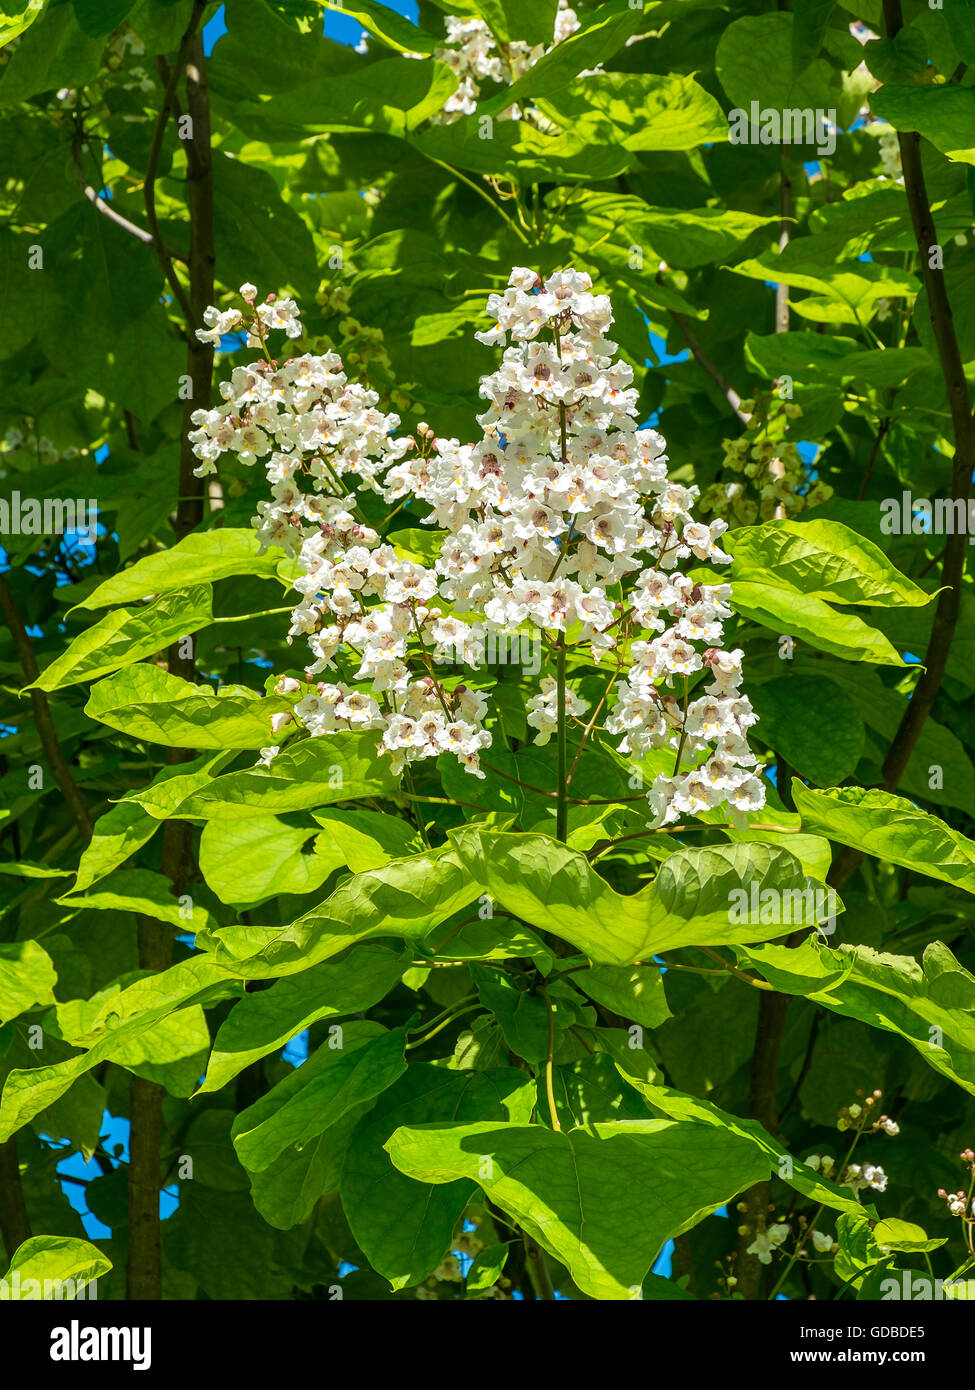 Catalpa / Catalpa Bignonioides - indischen Bean Tree Blossom - Frankreich. Stockfoto